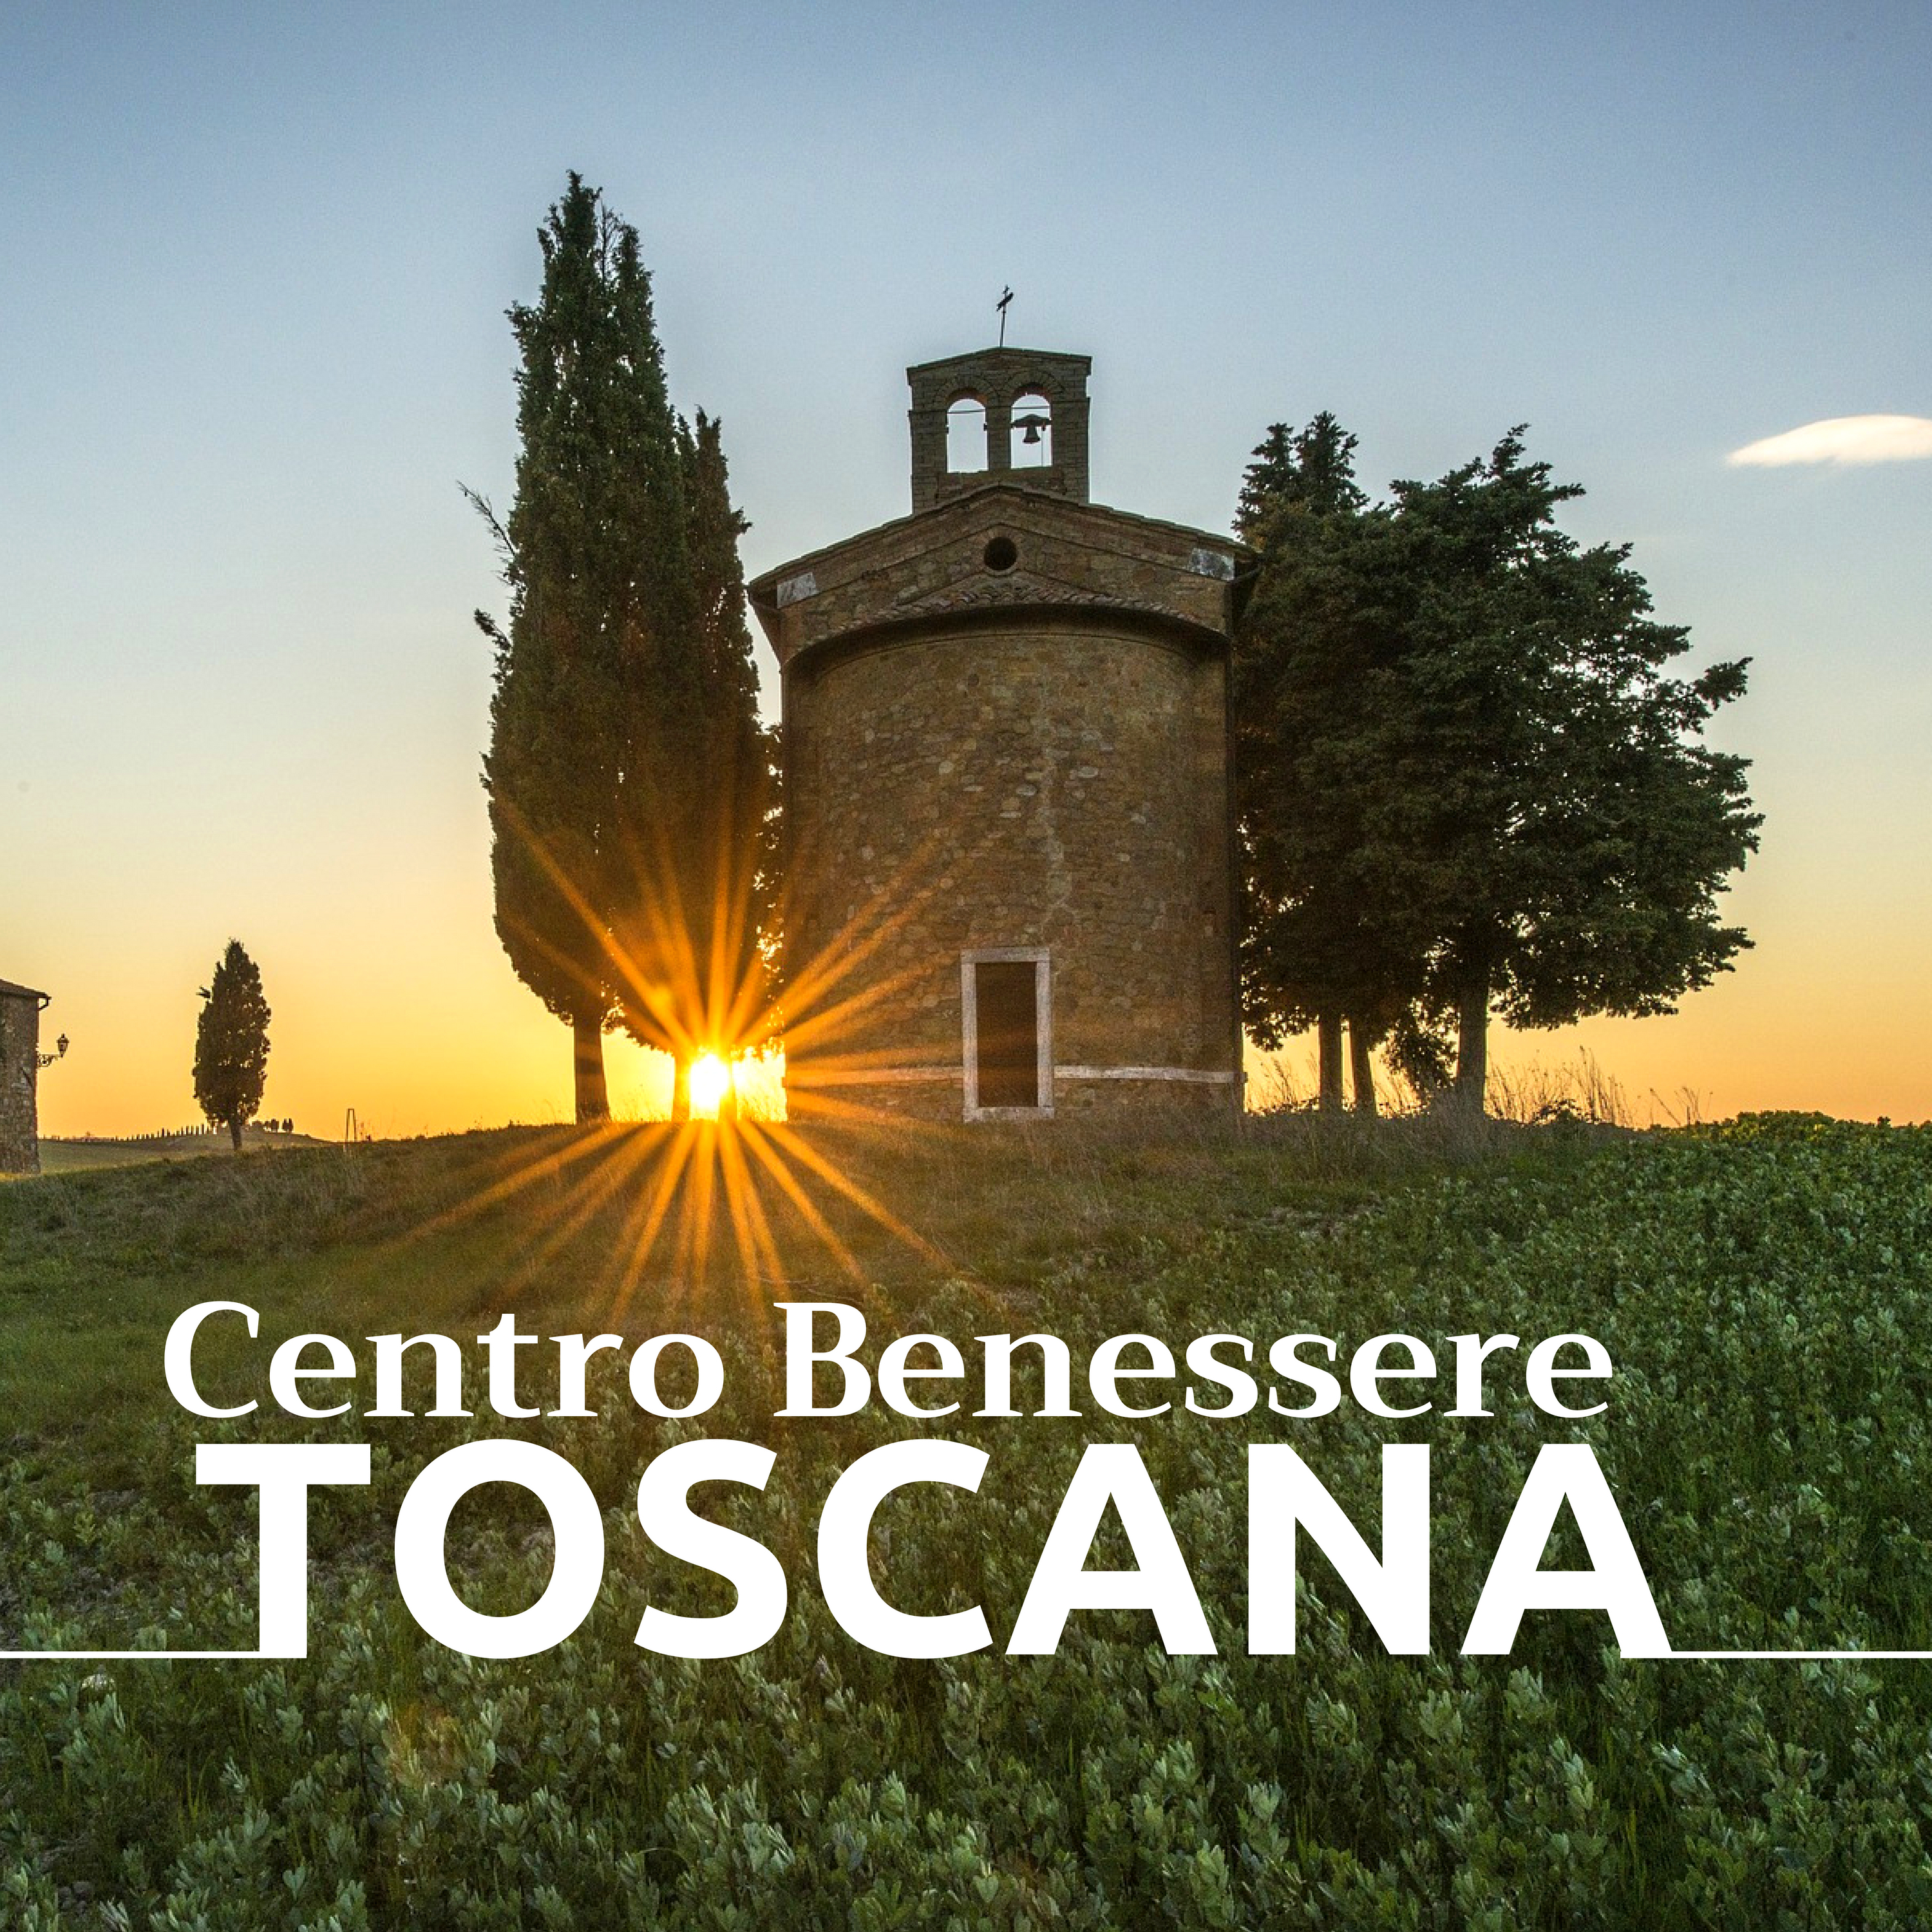 Centro Benessere Toscana